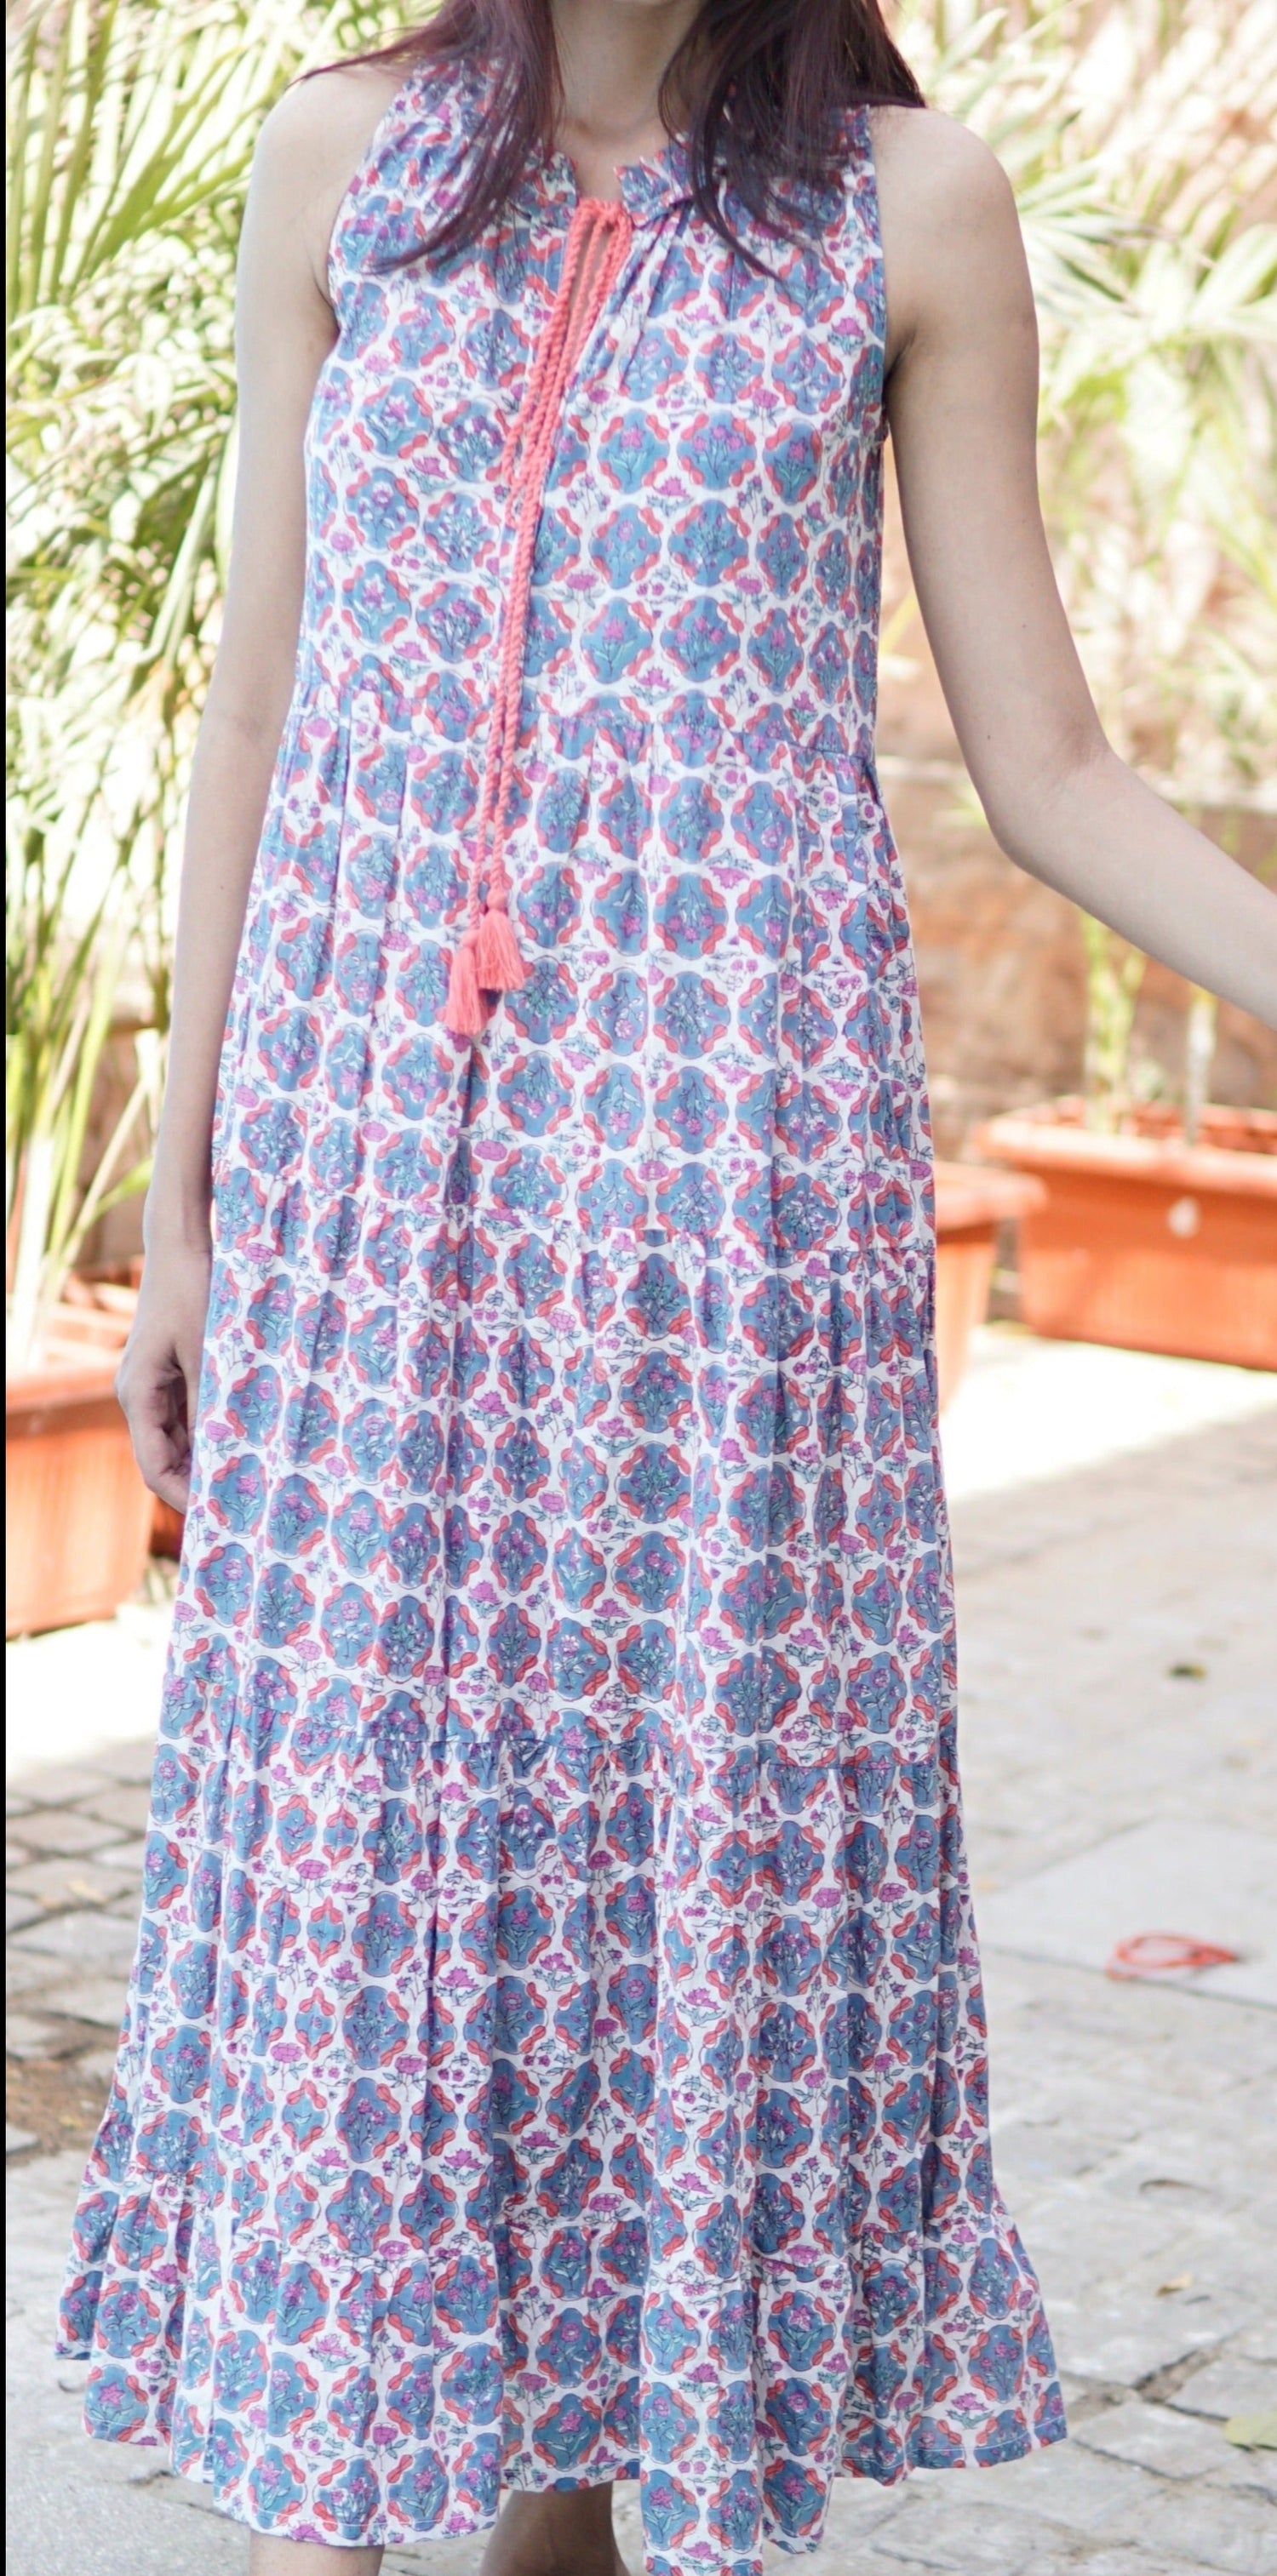 Beach dress, summer maxi dress, boho printed maxi dress, blue and coral cotton print.